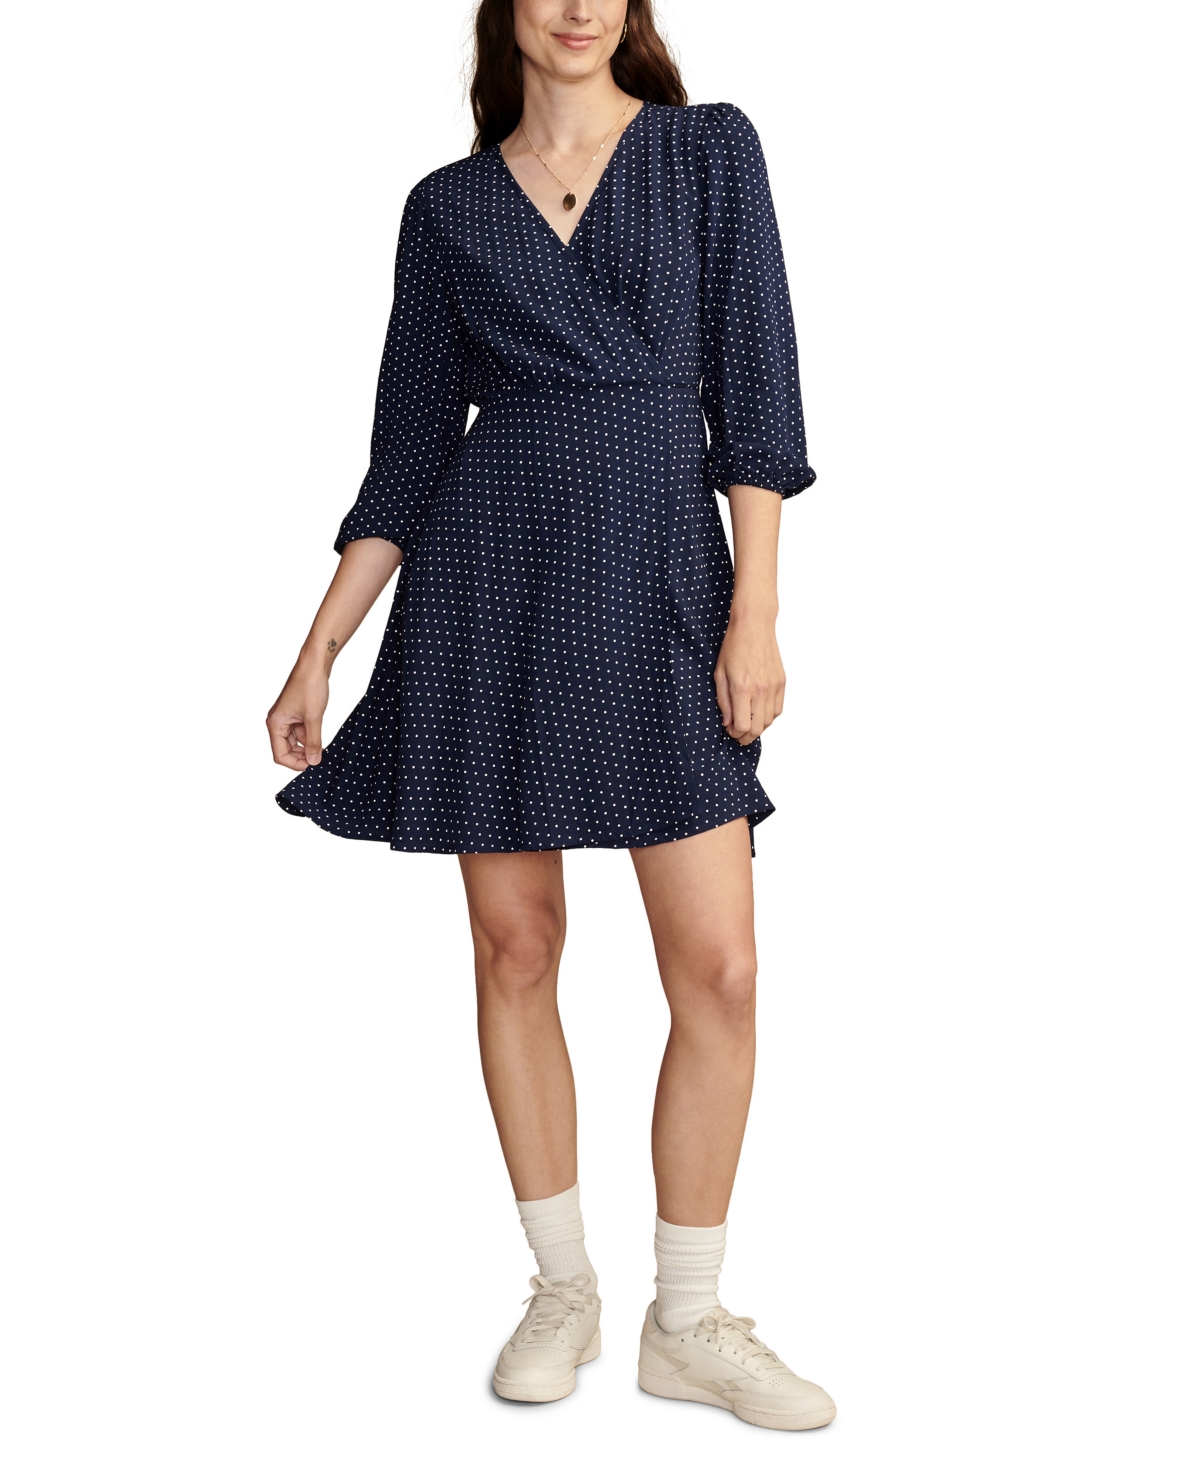 Women's Polka Dot Wrap Dress - Navy  Cream Dot